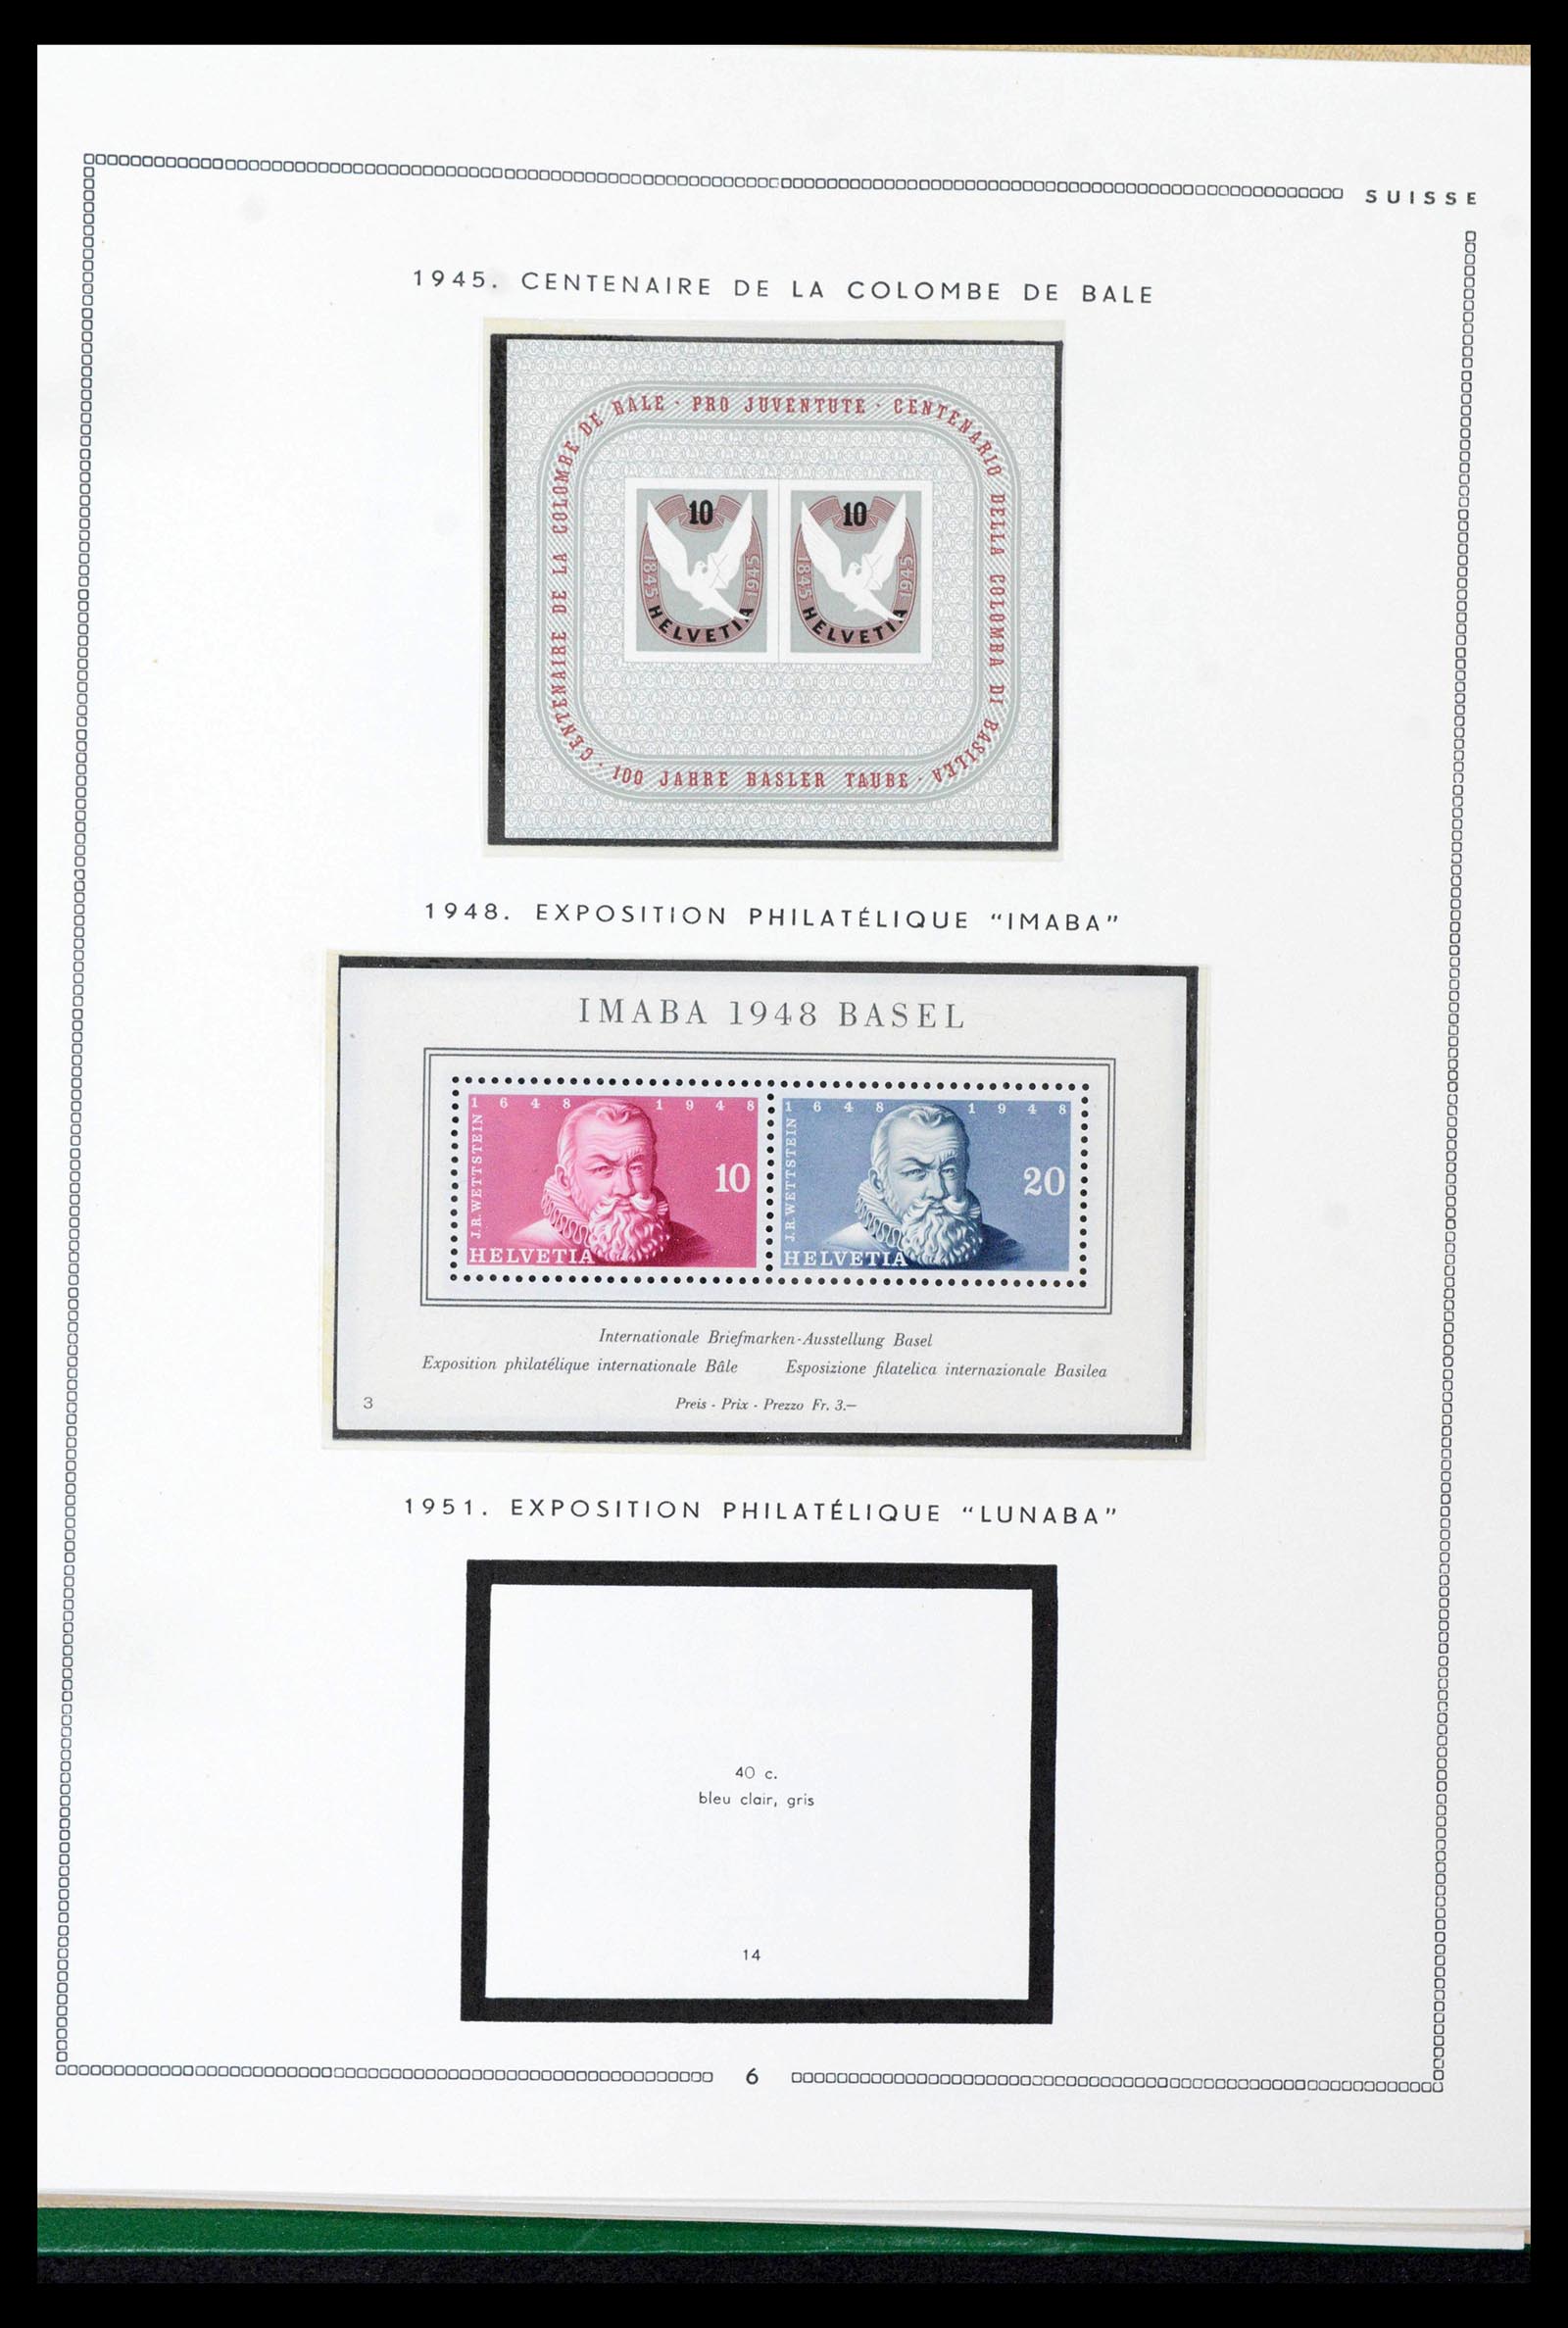 39096 0055 - Stamp collection 39096 Switzerland 1907-1963.